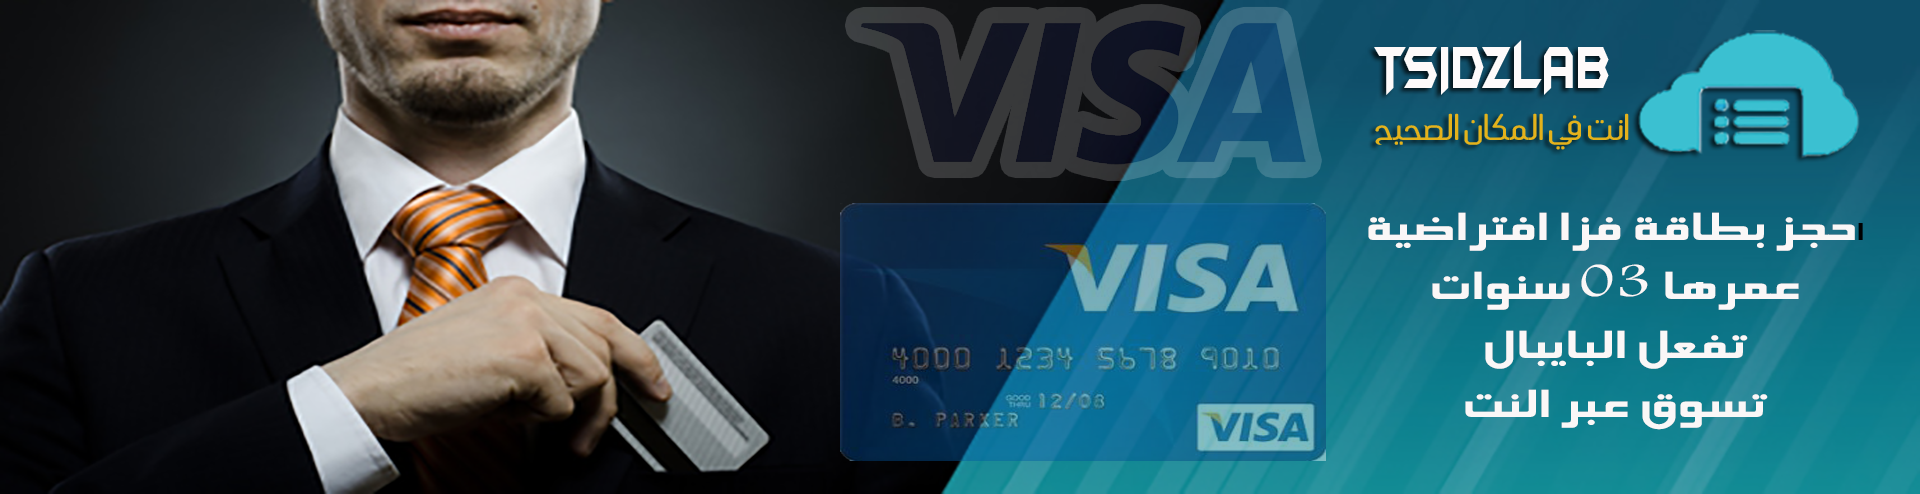 banner_credit-card